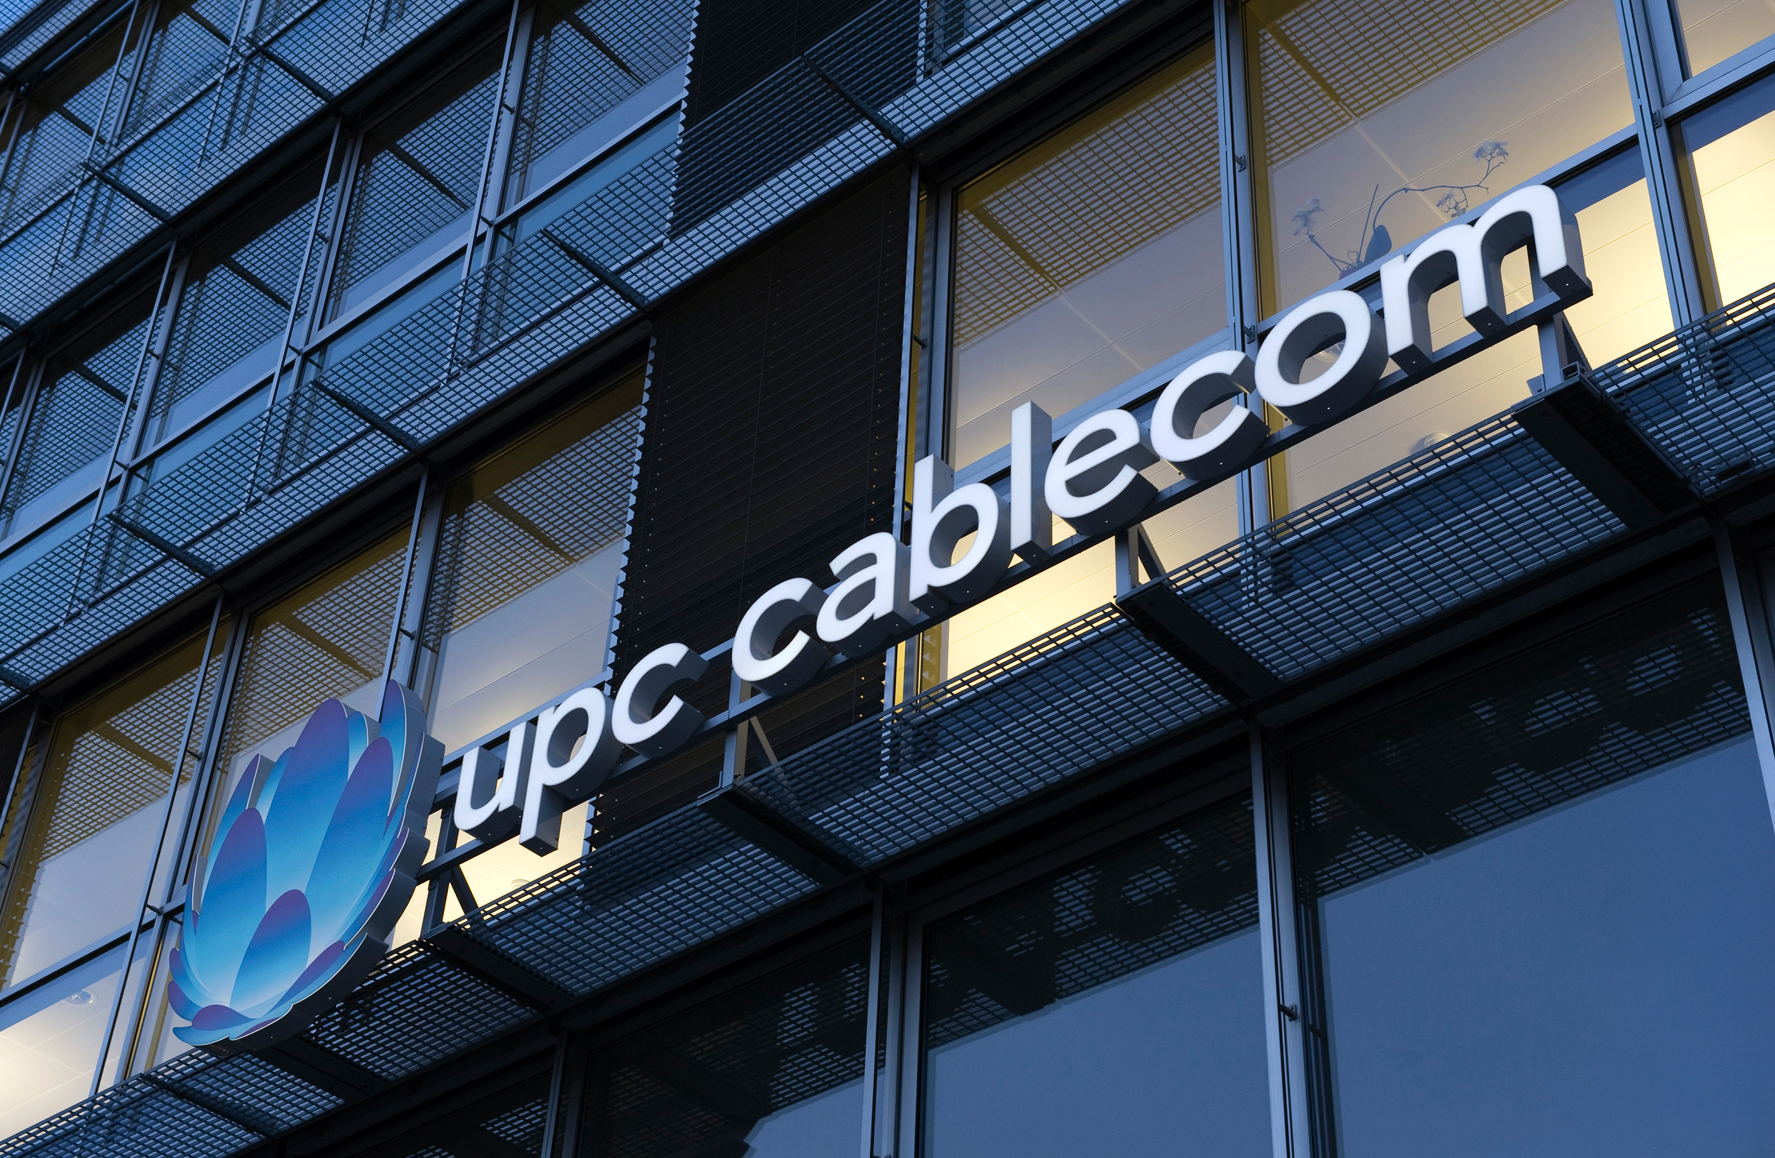 UPC Cablecom Business lanciert Unified Communication für KMU